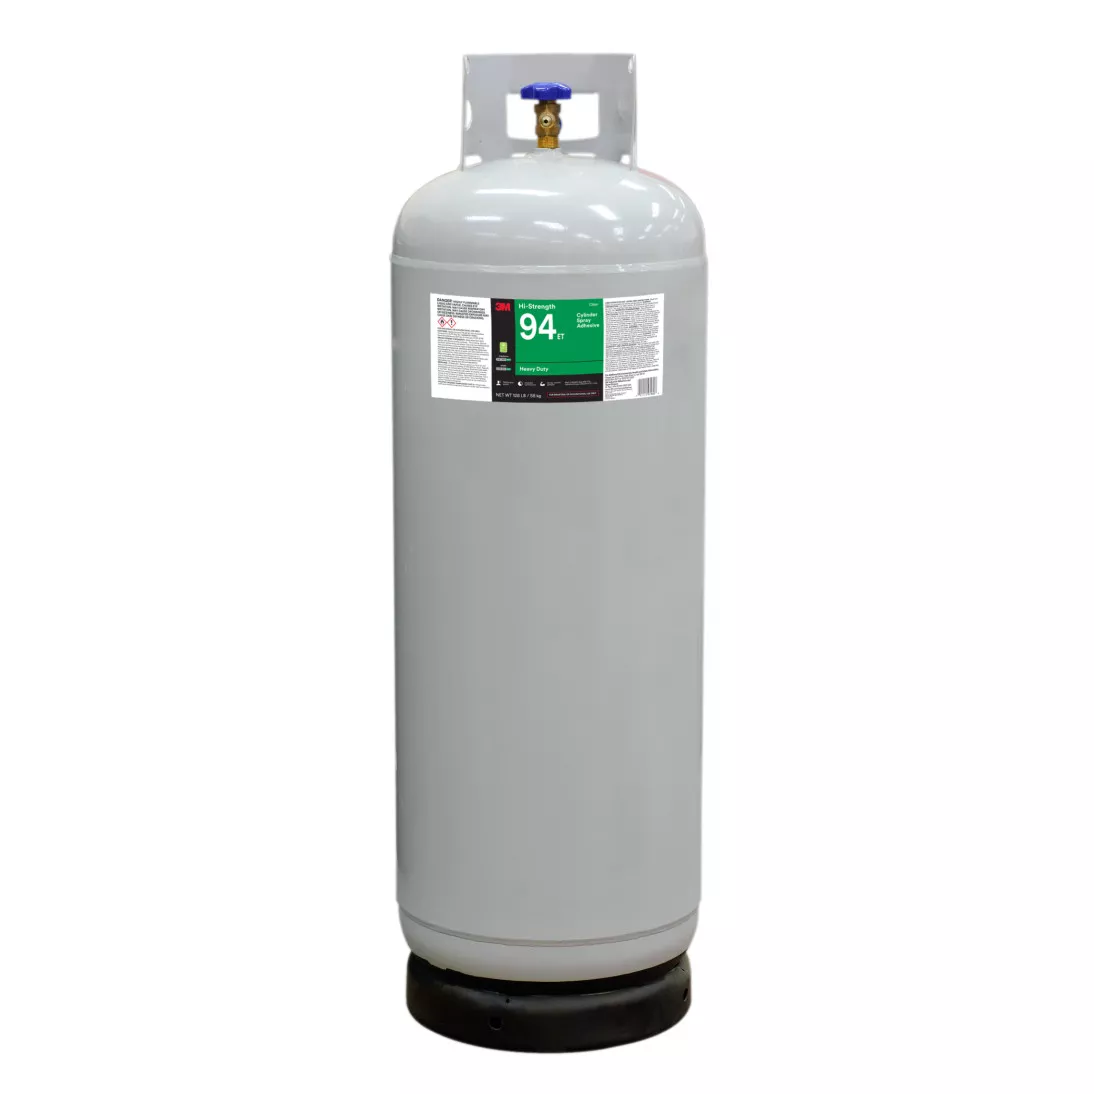 3M™ Hi-Strength 94 ET Cylinder Spray Adhesive, Clear, Intermediate
Cylinder (Net Wt 128 lb), 1/Cylinder